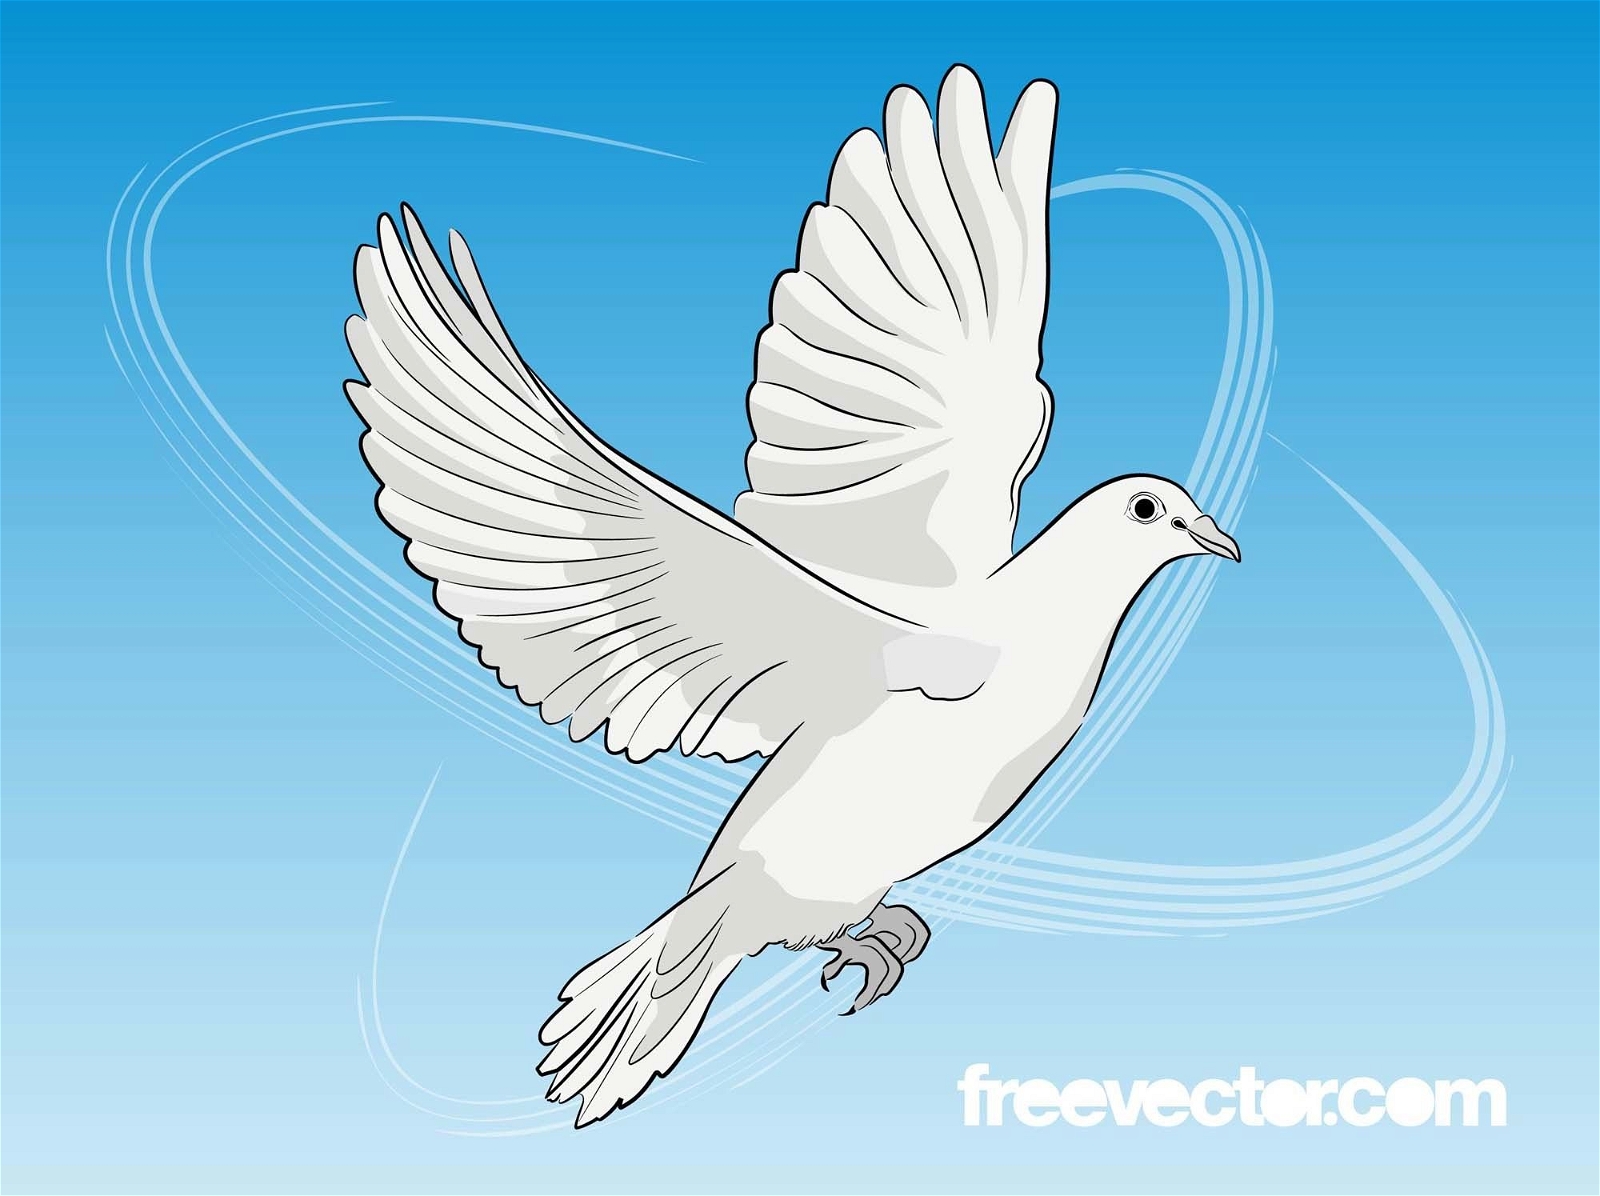 Flying Dove Black & White Sketch - Vector download